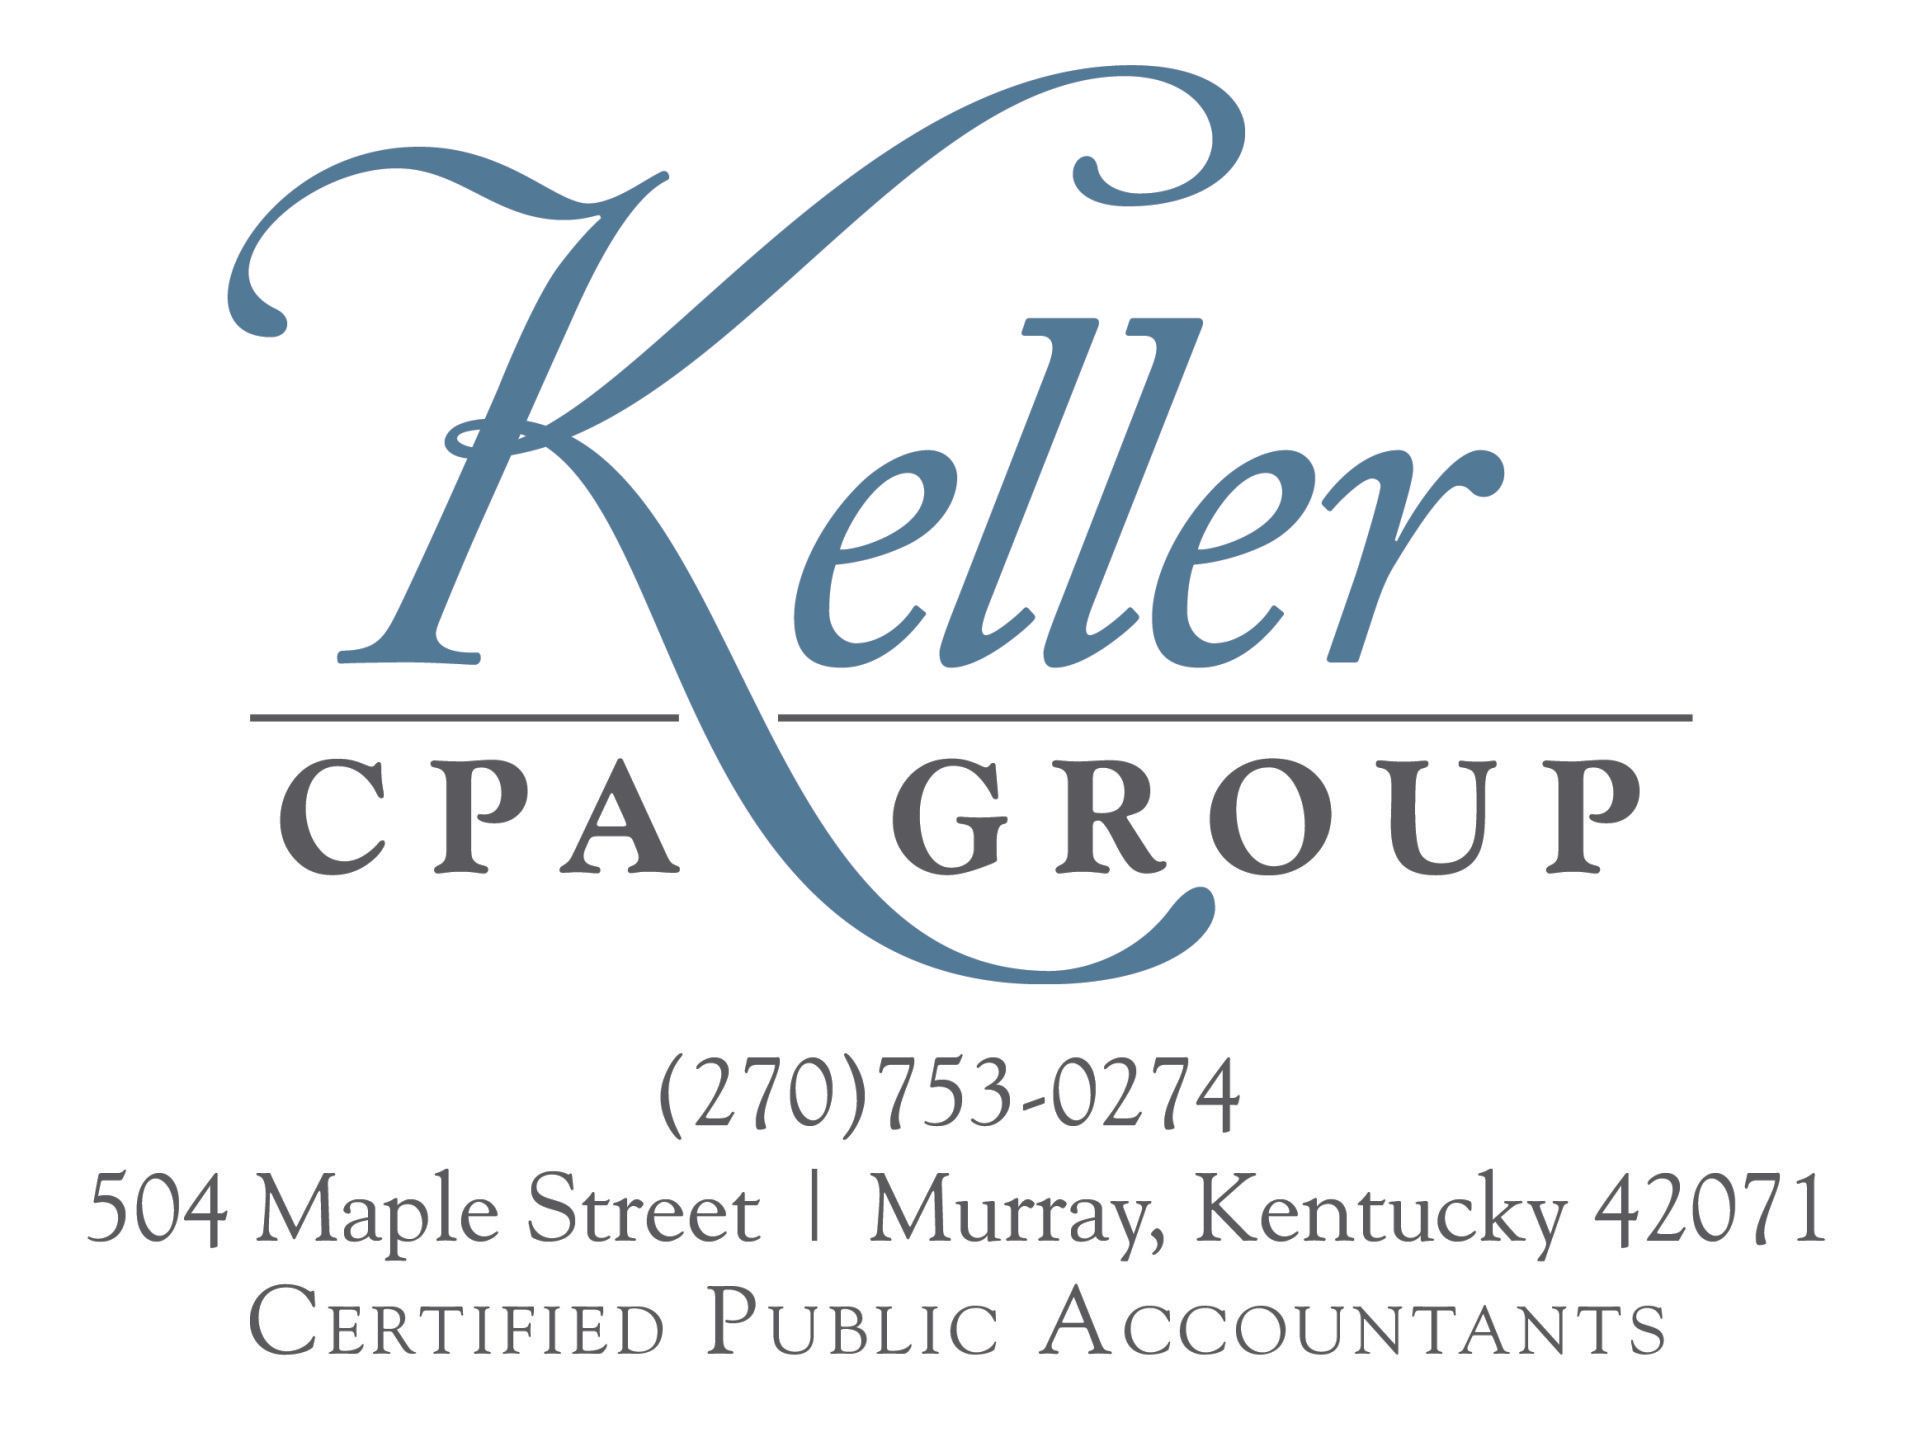 Pierce Keller & Associates